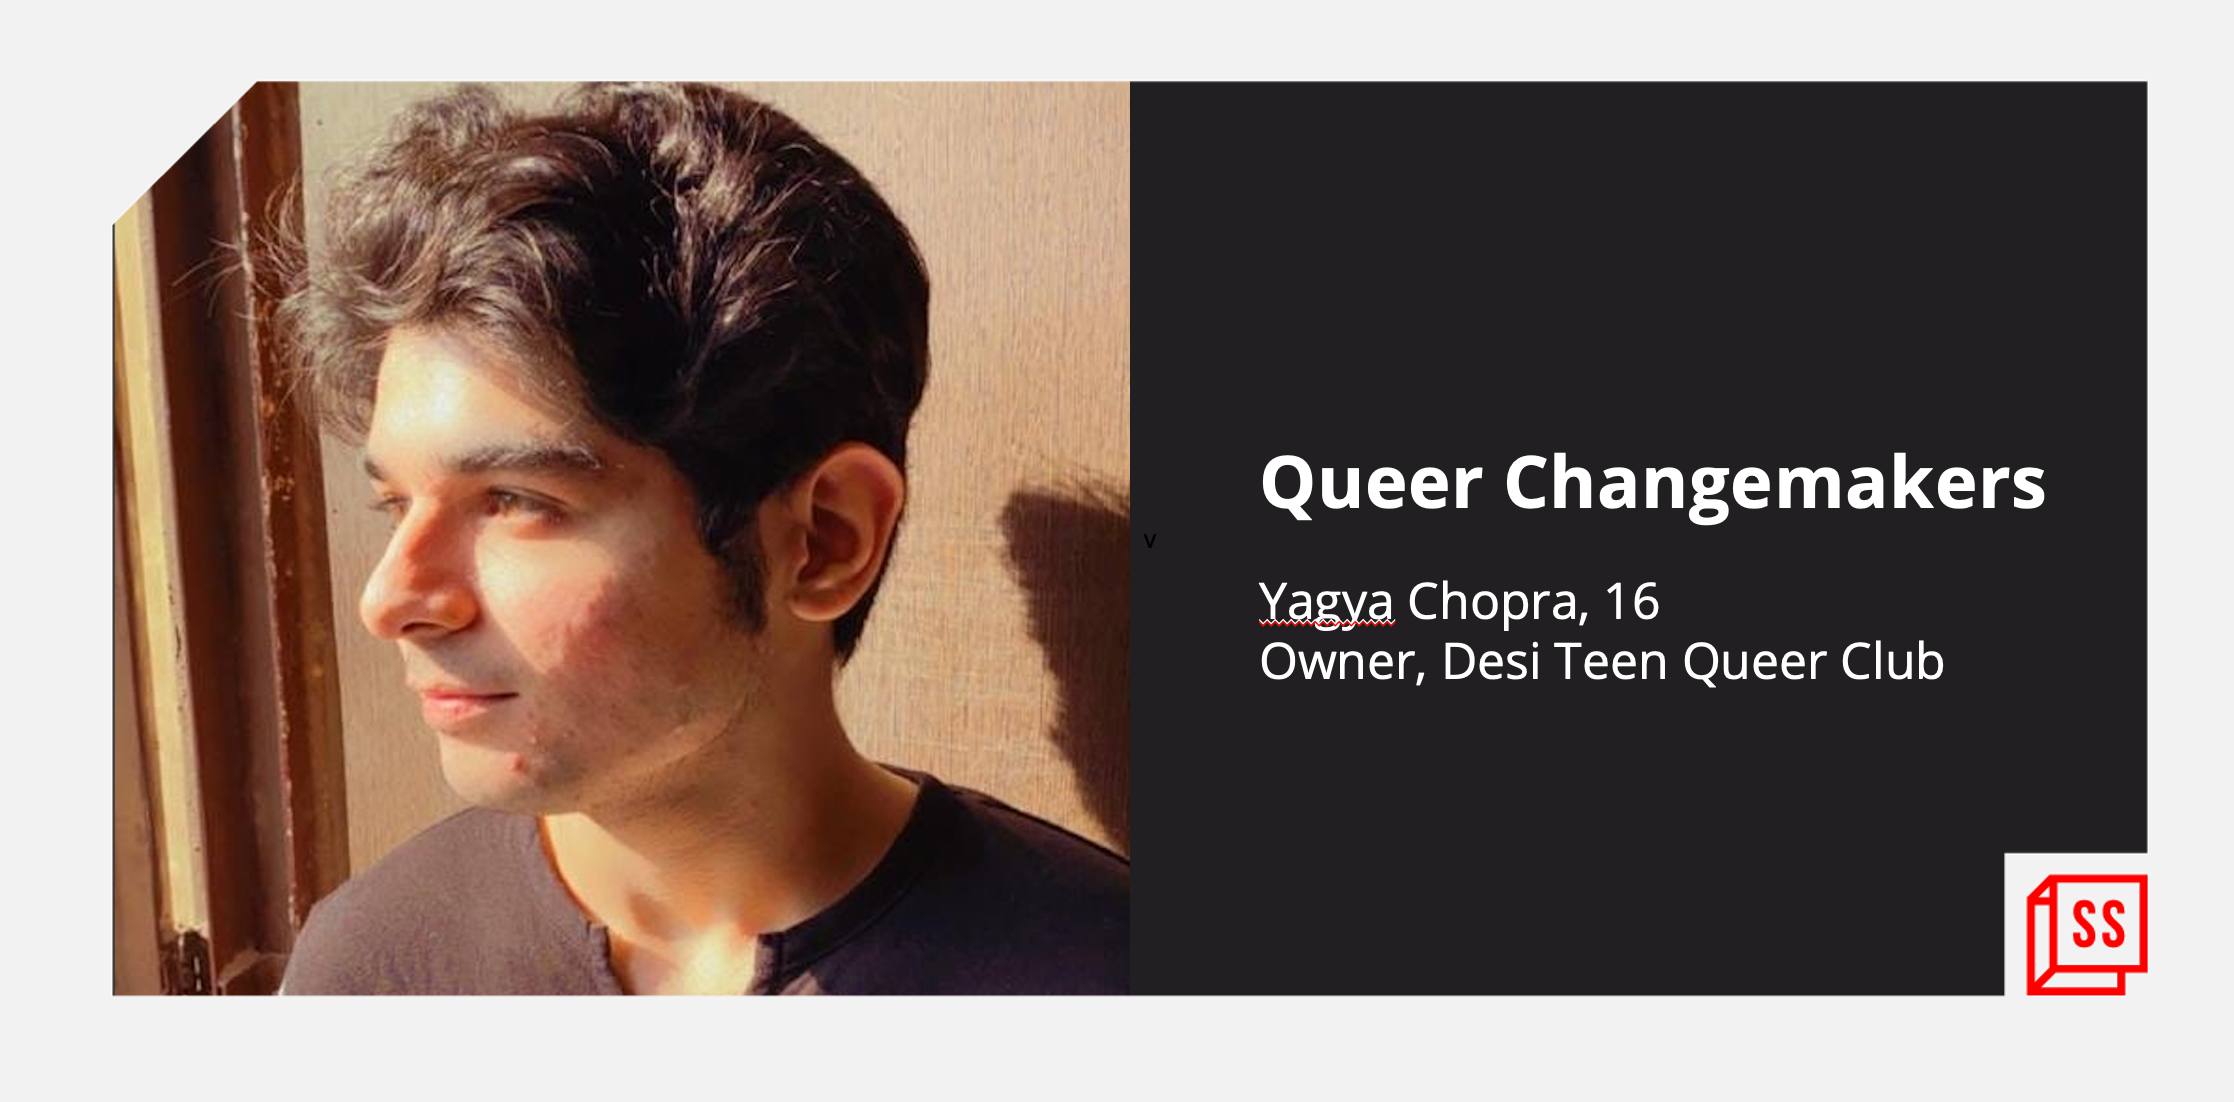 [Queer Changemakers] On being a queer teen in India